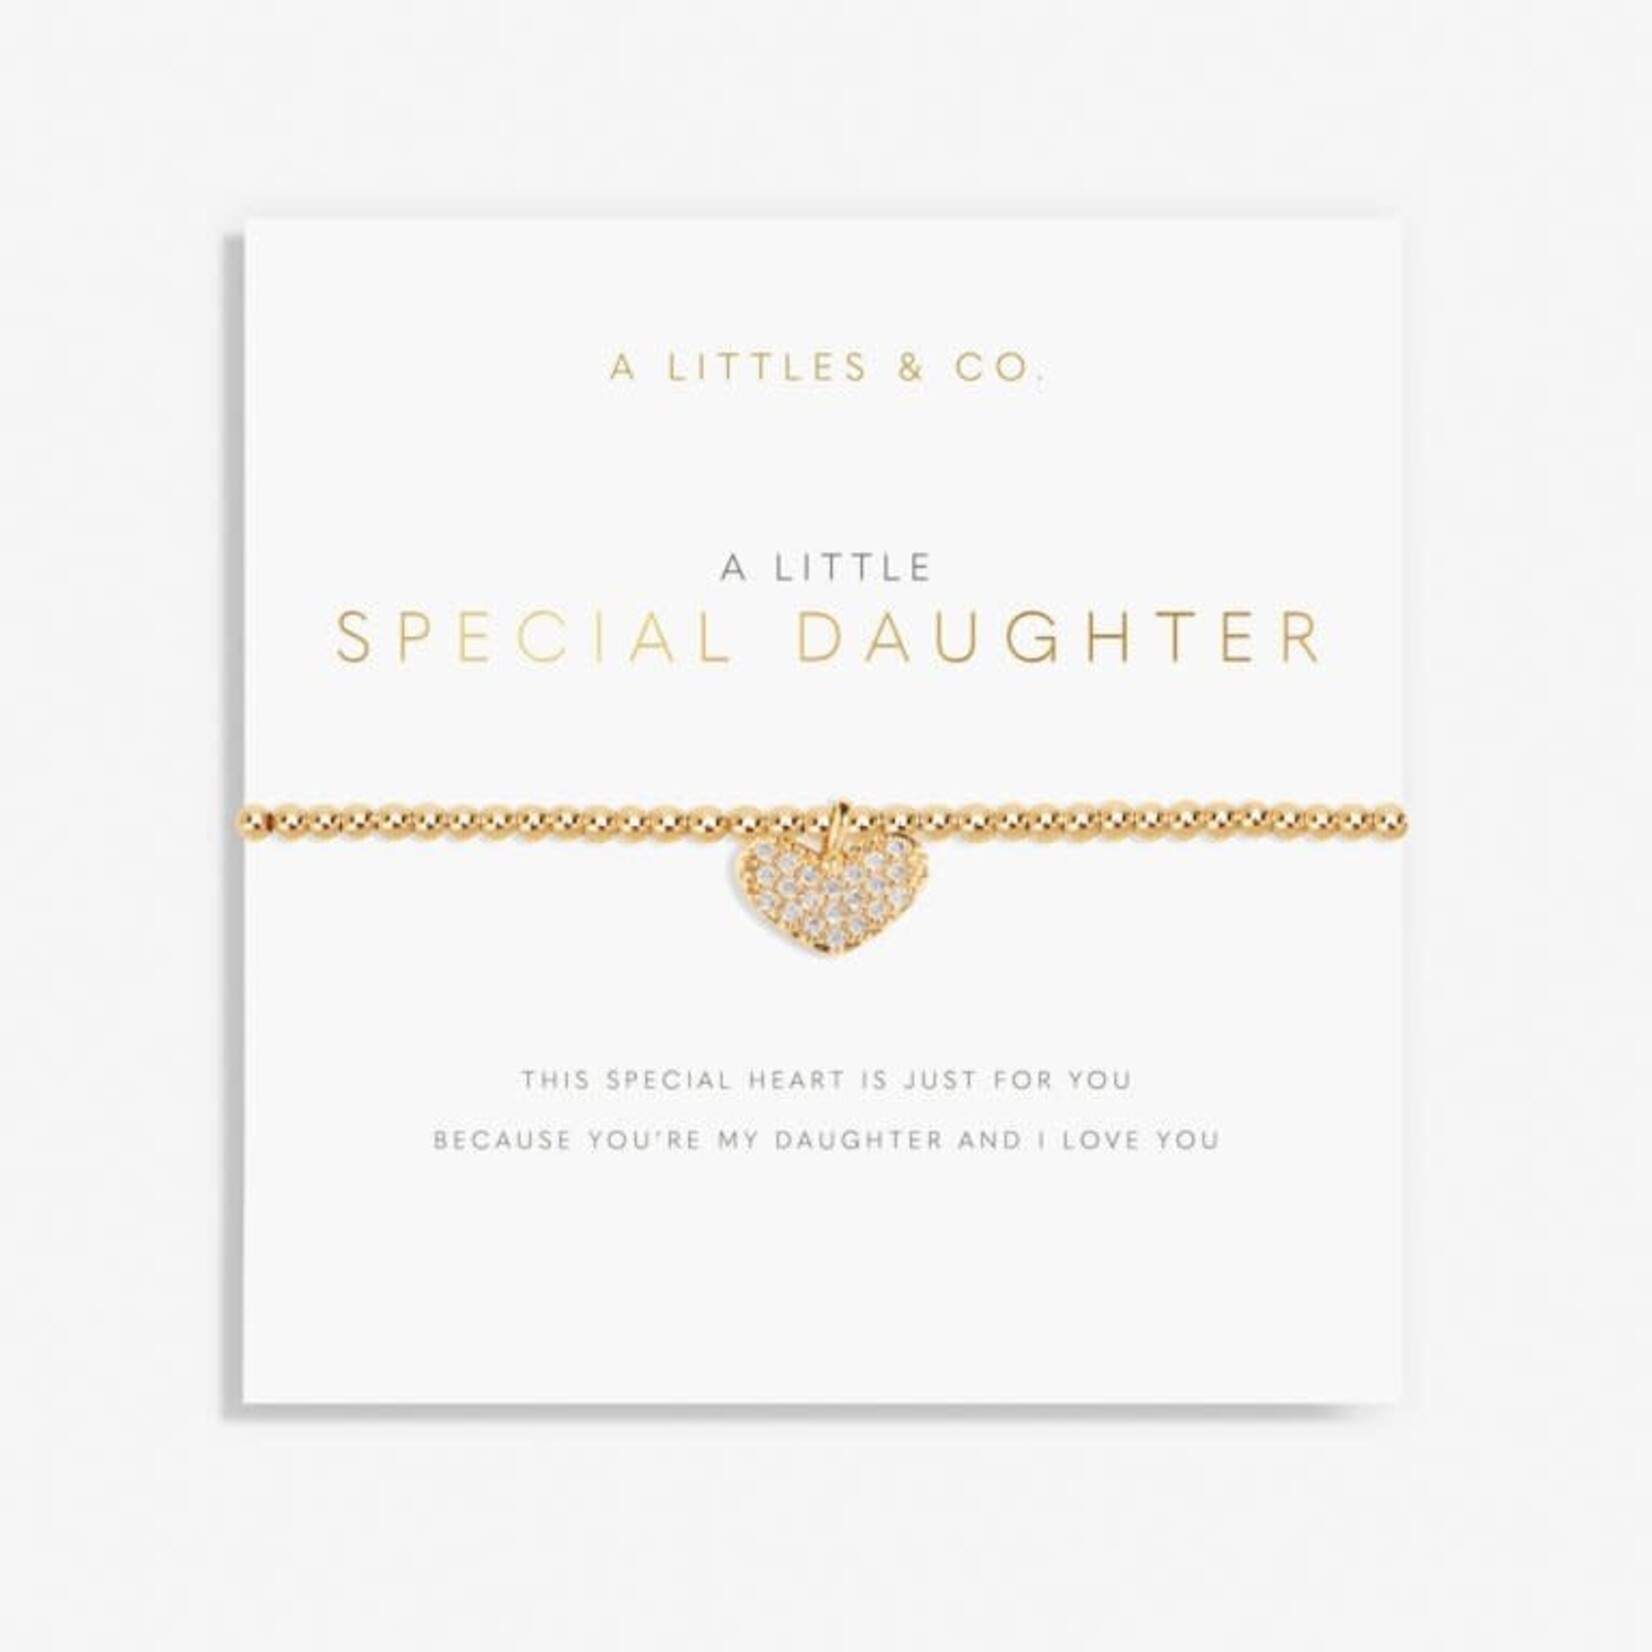 A LITTLES & CO A LITTLE SPECIAL DAUGHTER  GOLD BRACELET